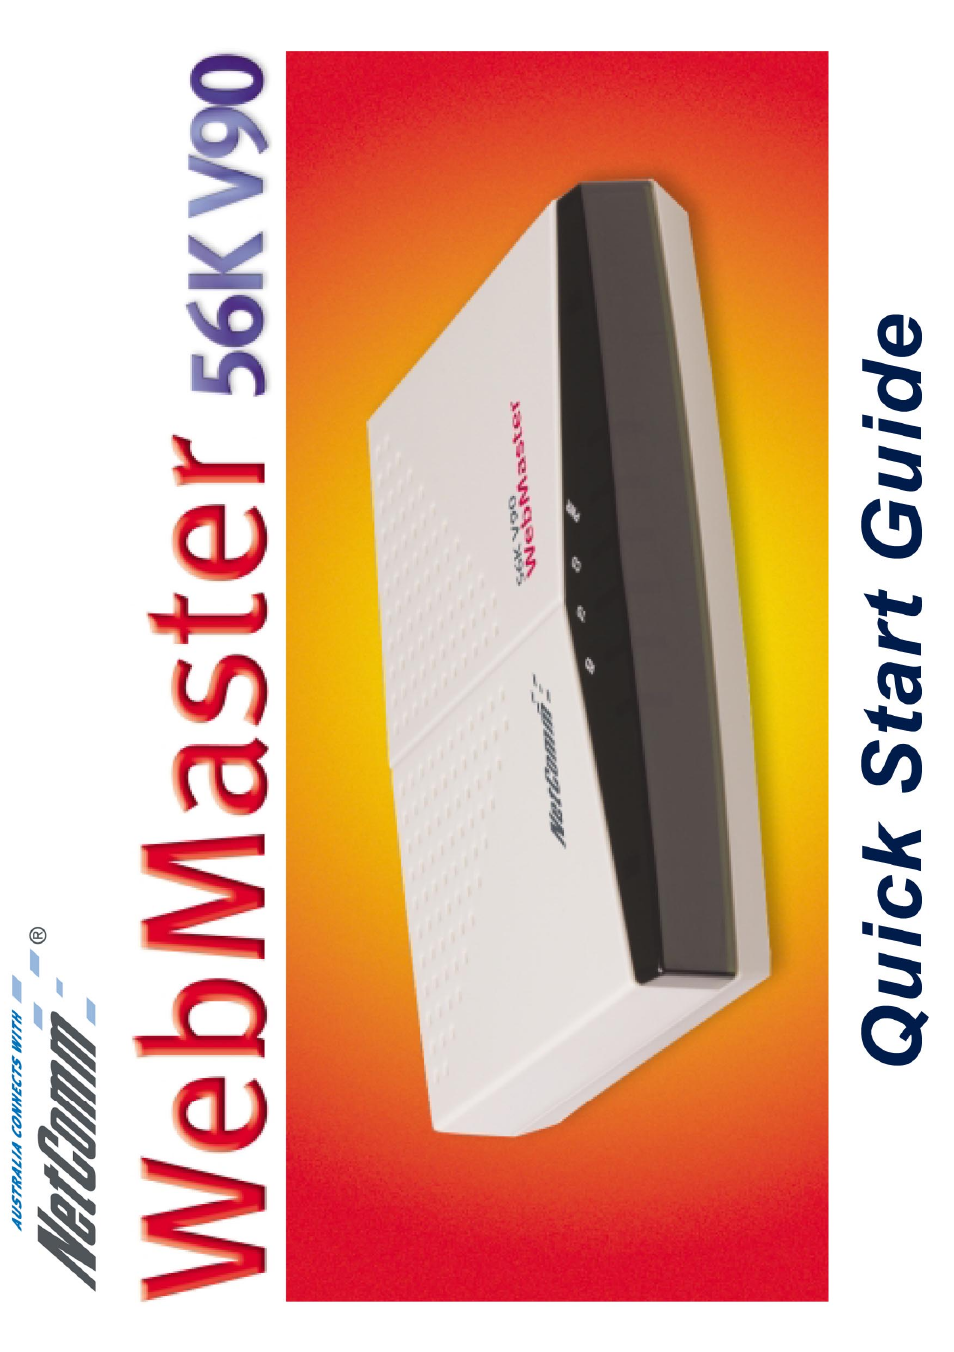 56K WebMaster CD1800